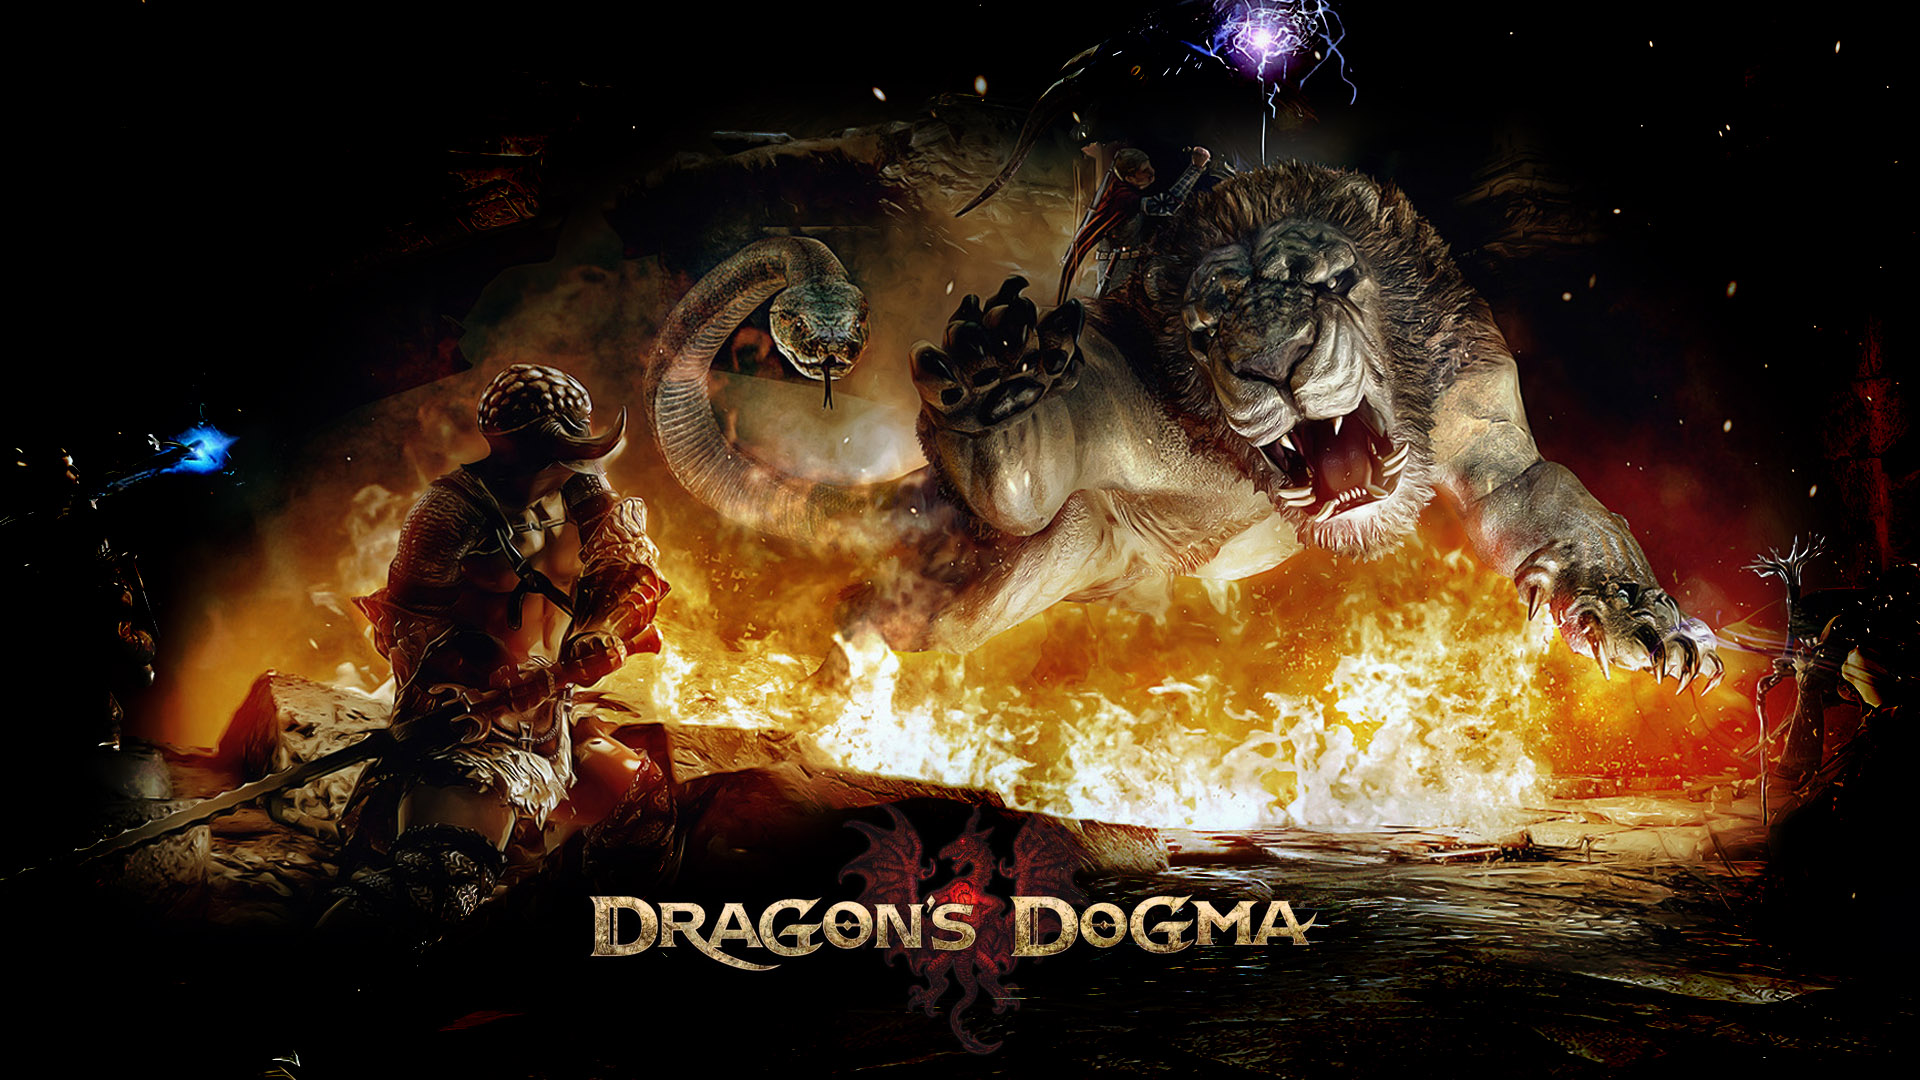 Dragon's Dogma 2 Preorders Are Live - Bonuses, Editions, And More - GameSpot